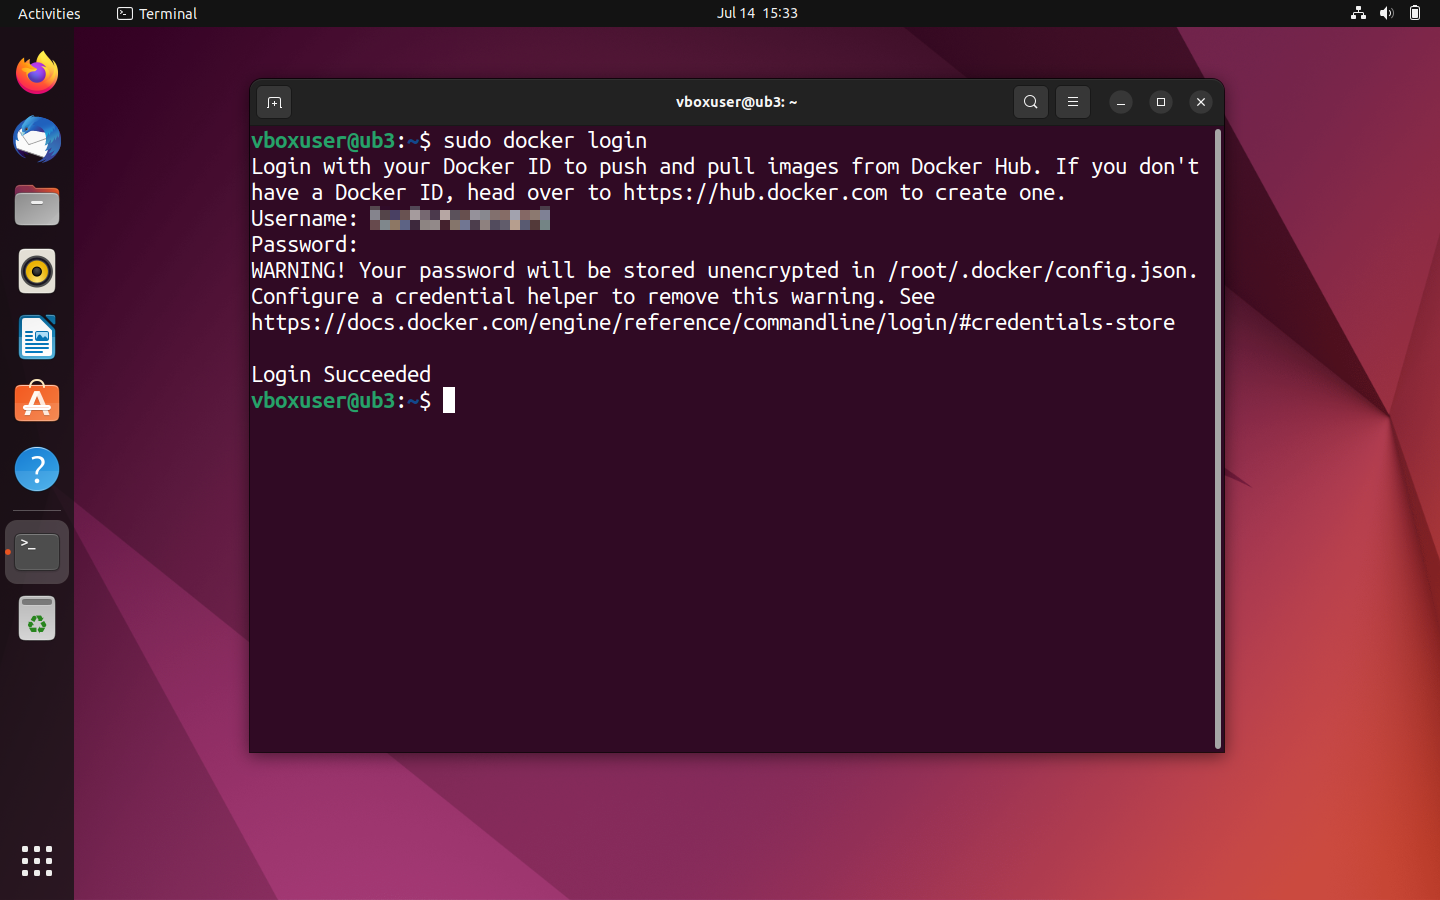 Log in to the Docker hub via the Ubuntu terminal